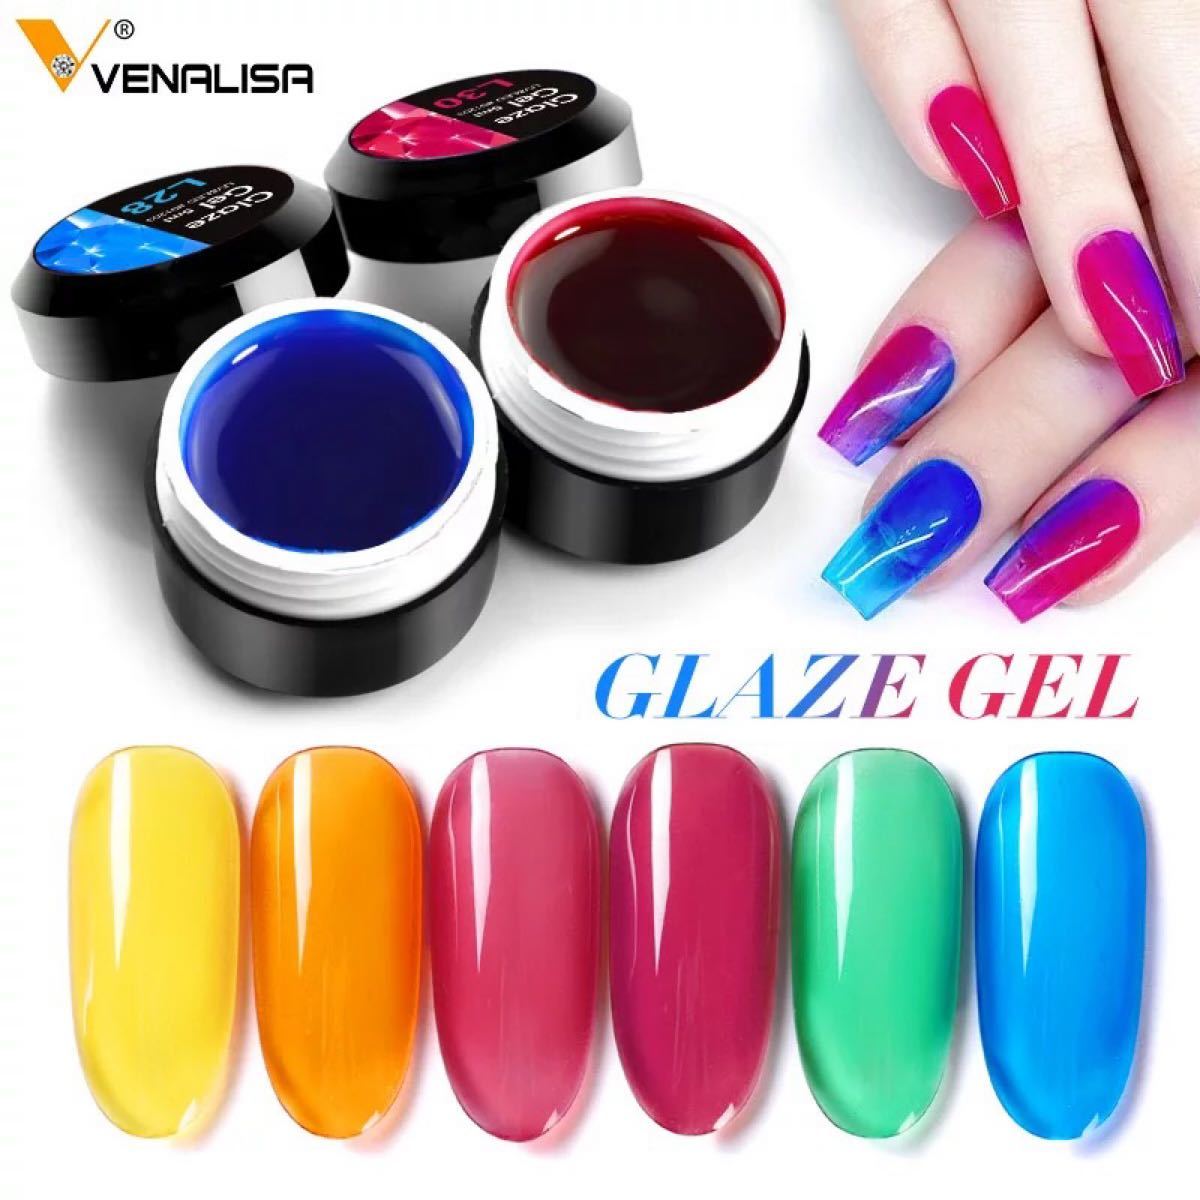 New！！VENALISA Glazeガラスアートジェル12色セット